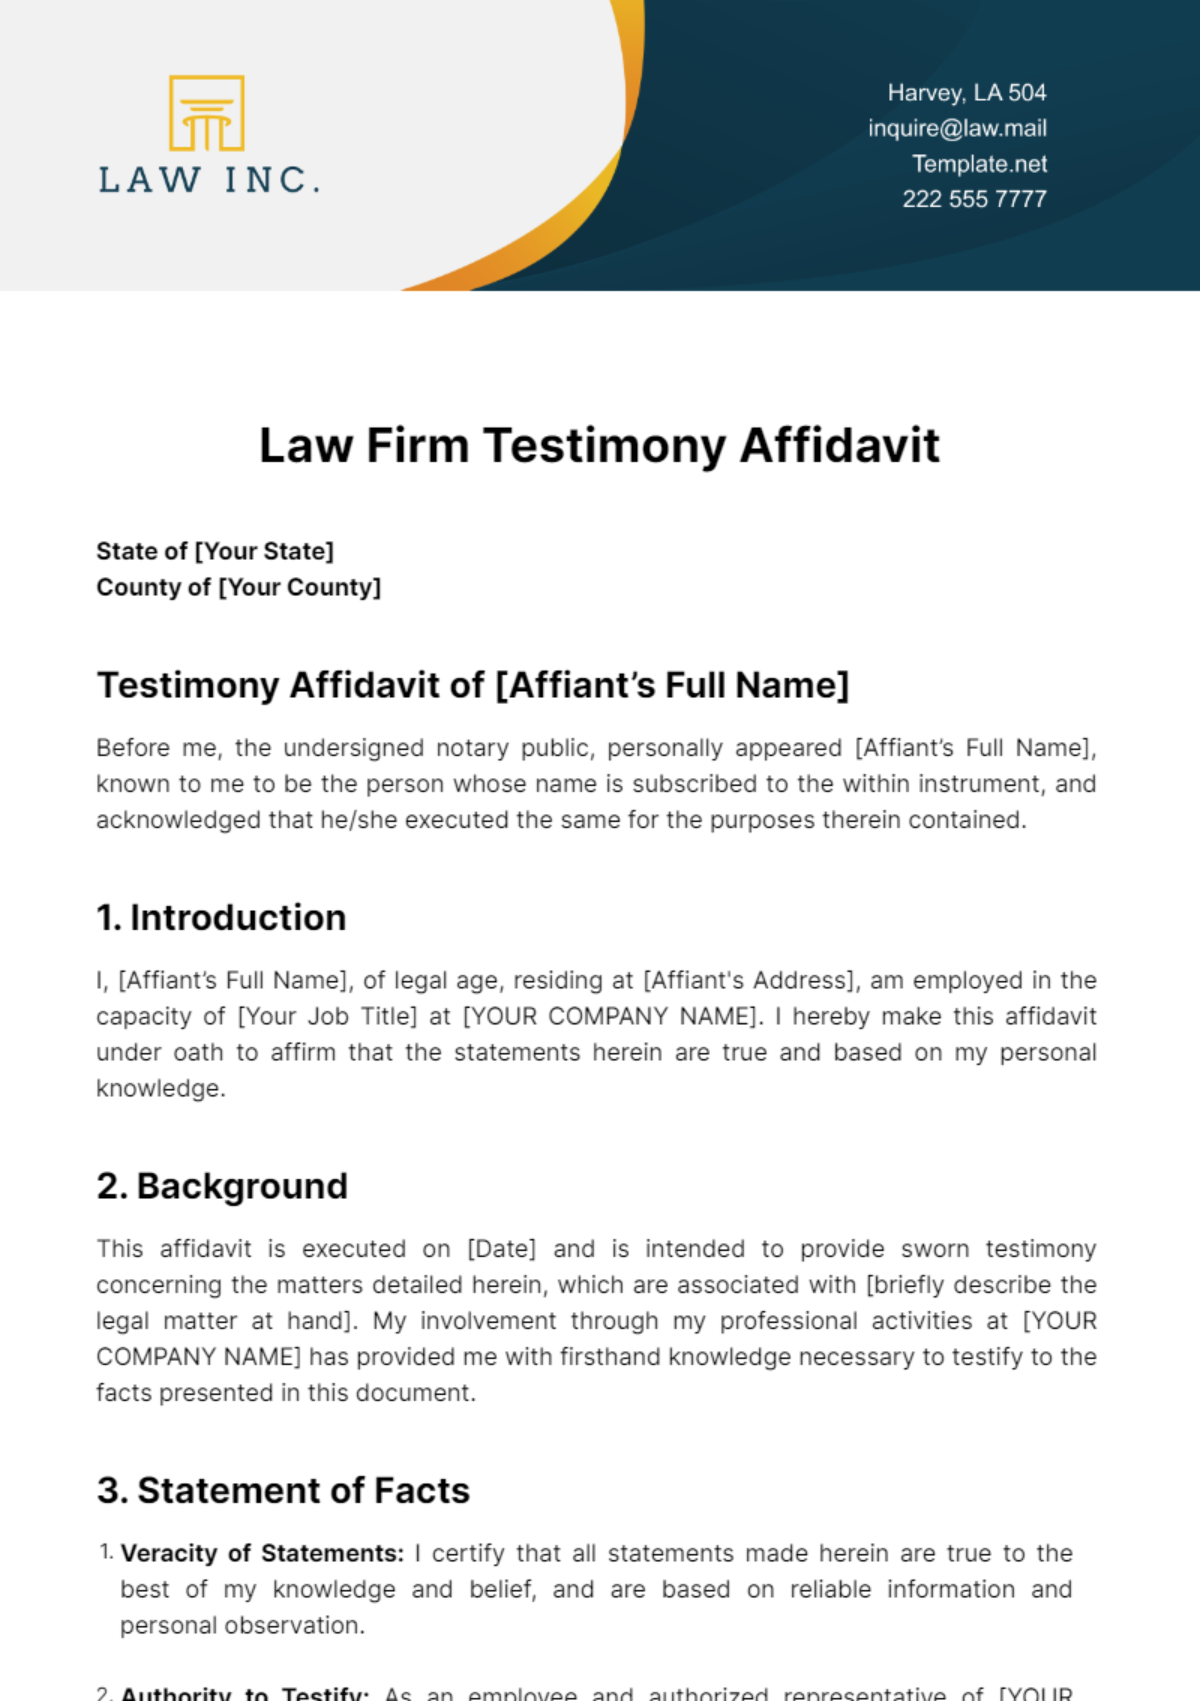 Law Firm Testimony Affidavit Template